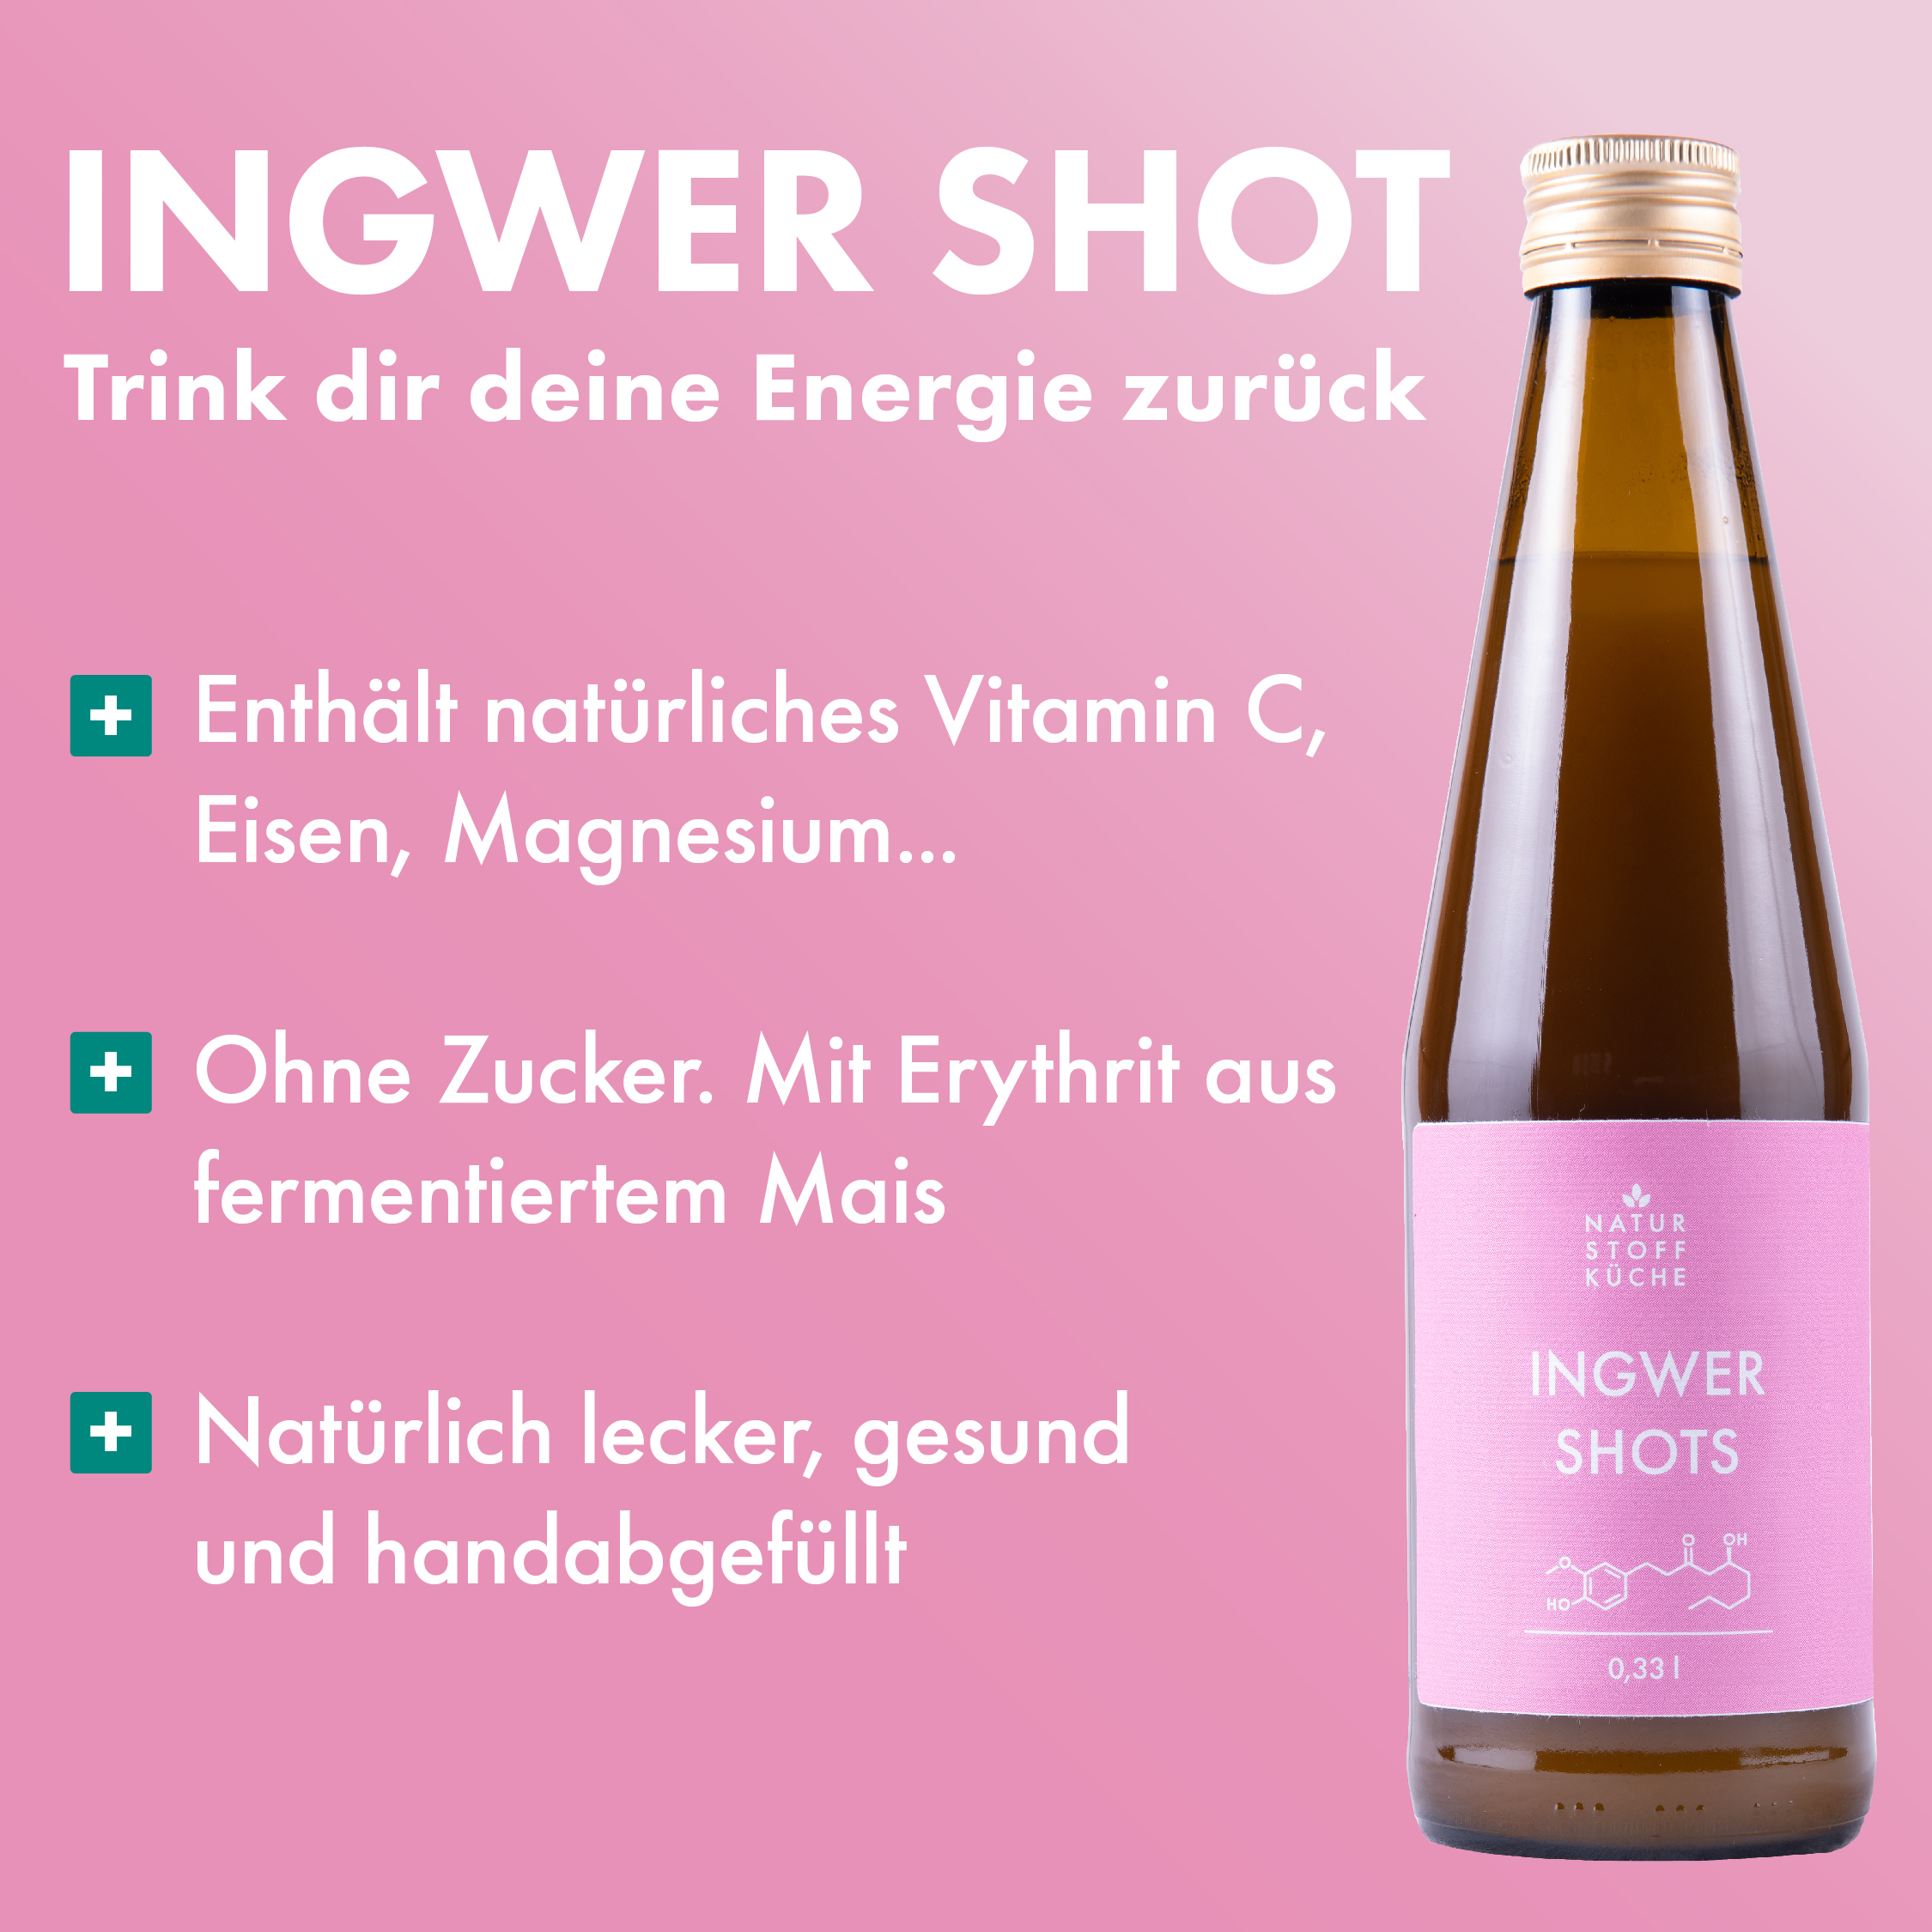 Ingwer Shot Classic - Wissen